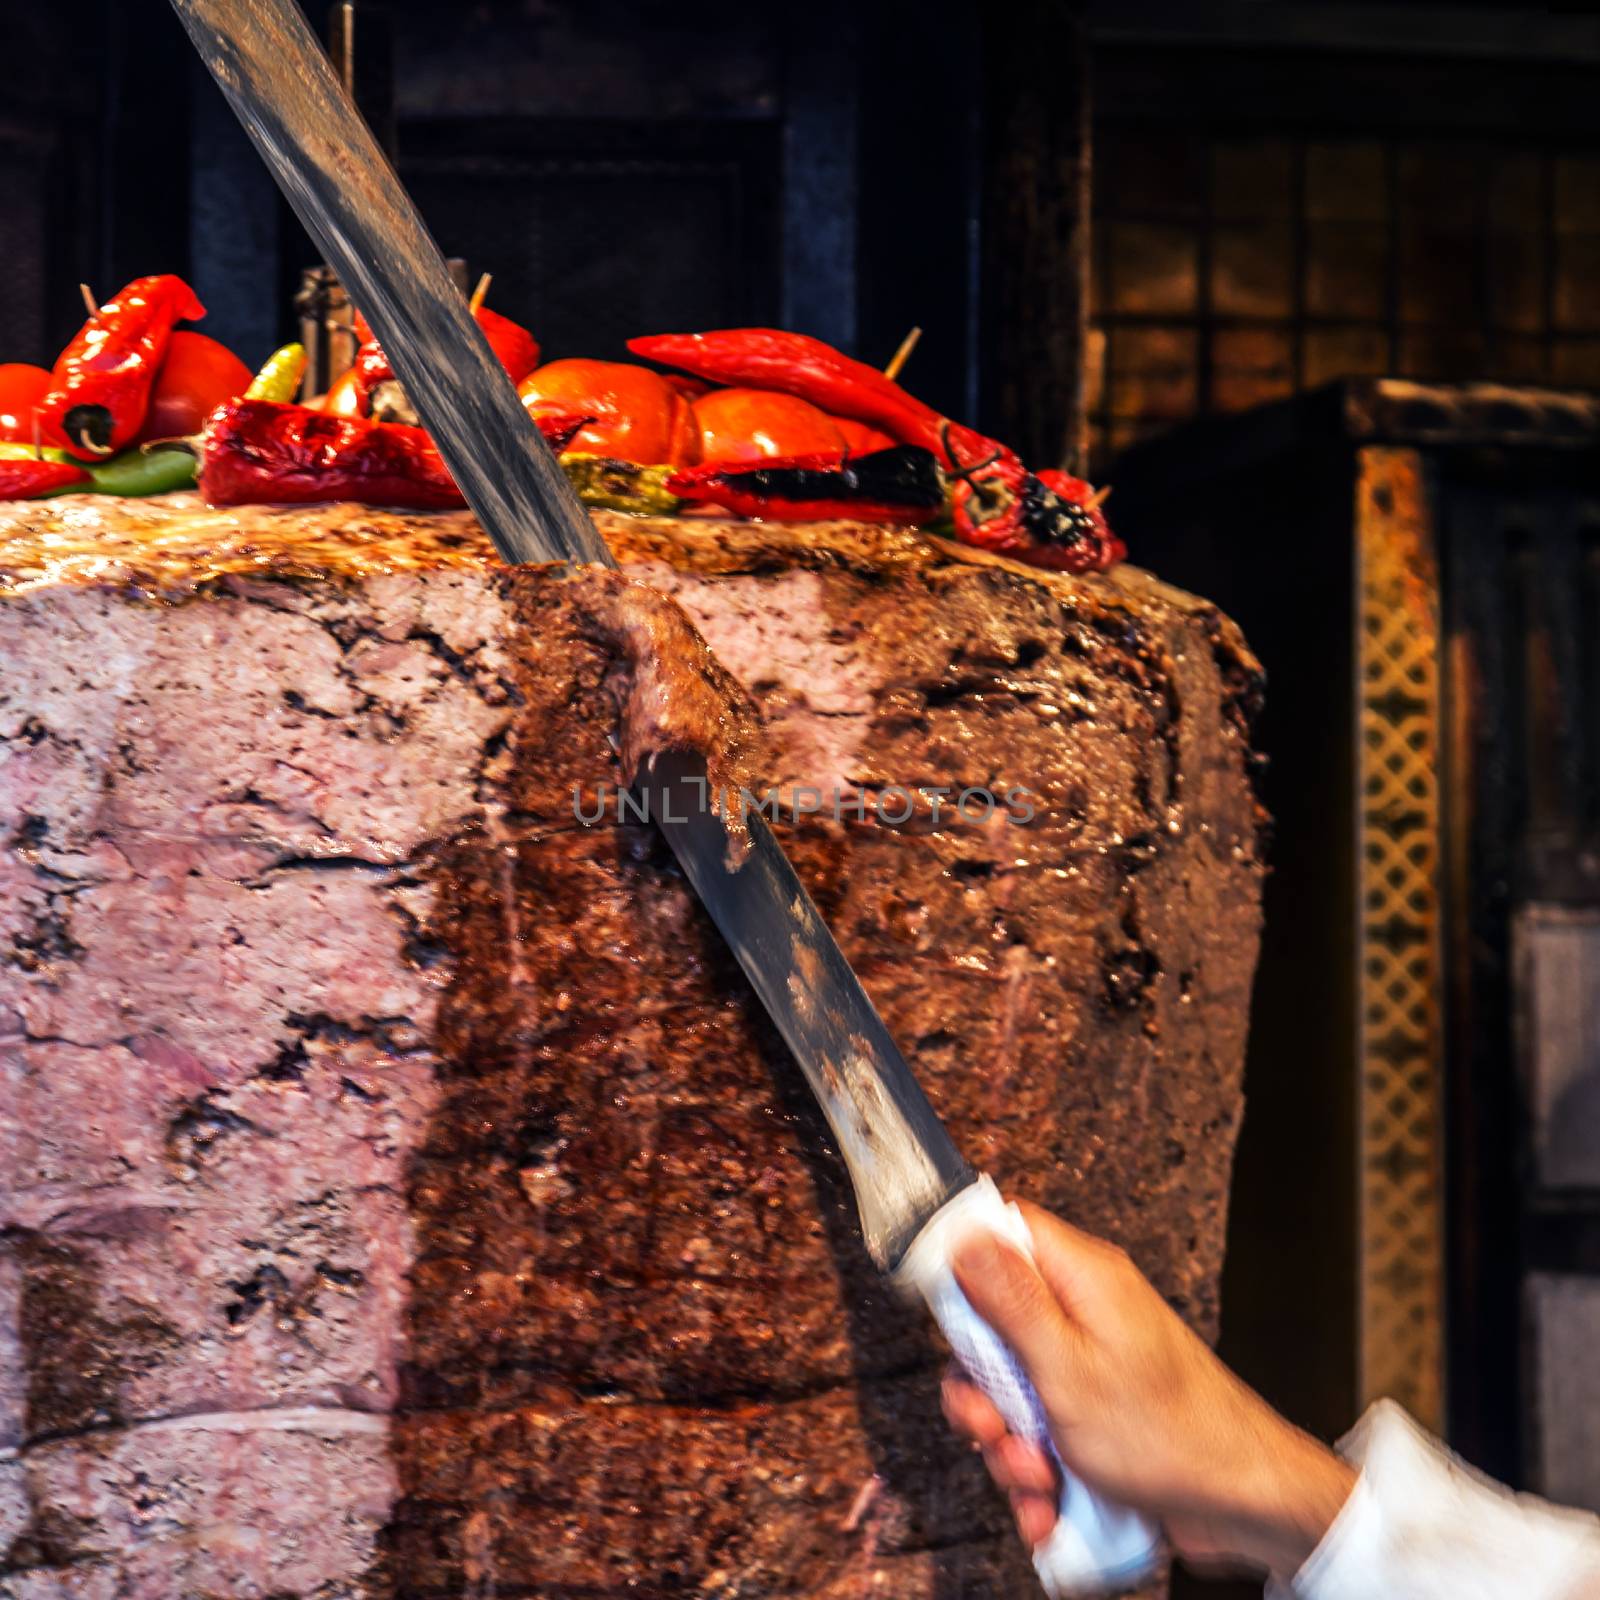 doner kebab cook knife to cut cooking kebab shop Turkish cuisine